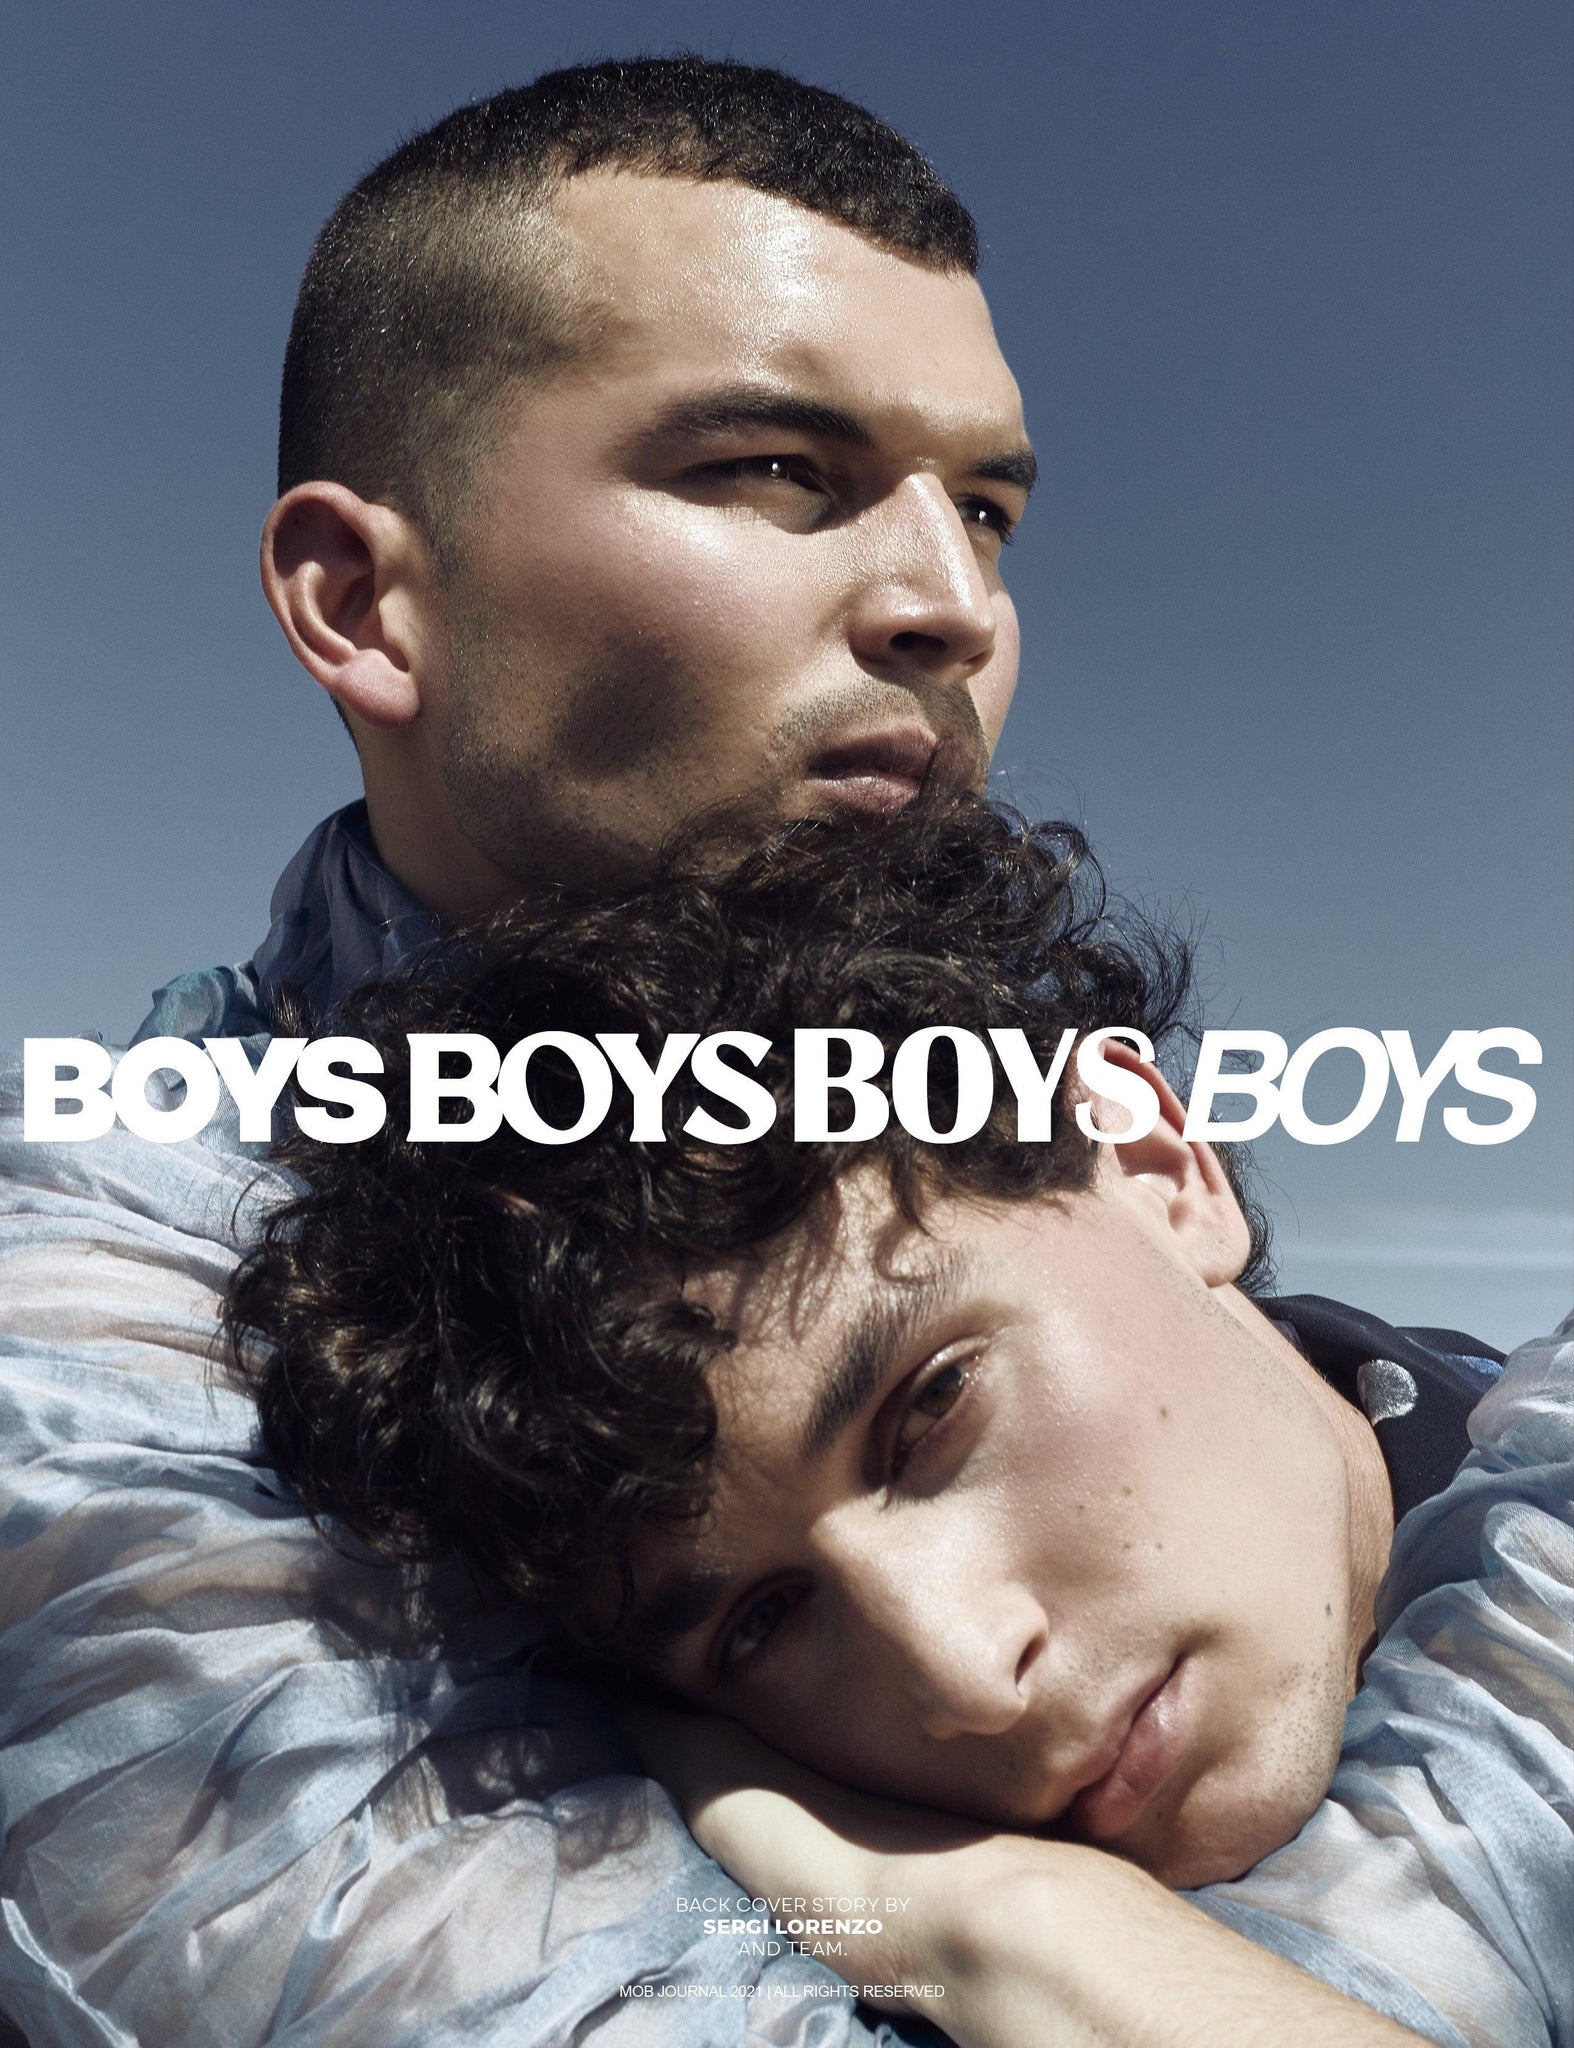 BOYS BOYS BOYS BOYS | VOLUME TEN | ISSUE #01 - Mob Journal